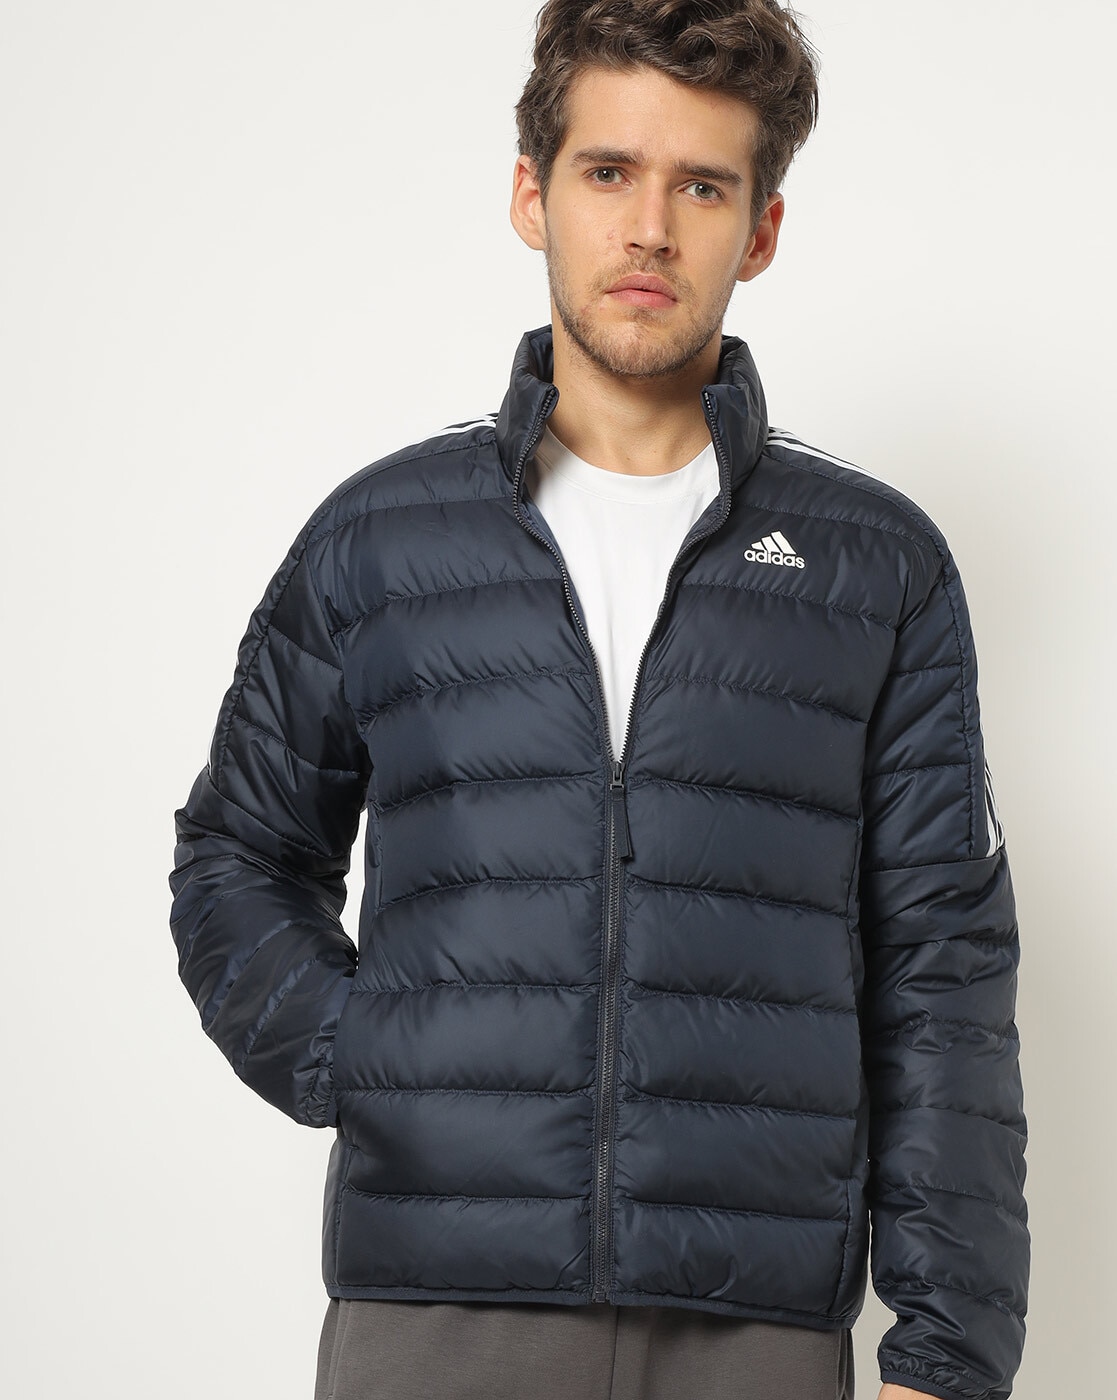 Buy Jackets & Coats Men Online | Ajio.com